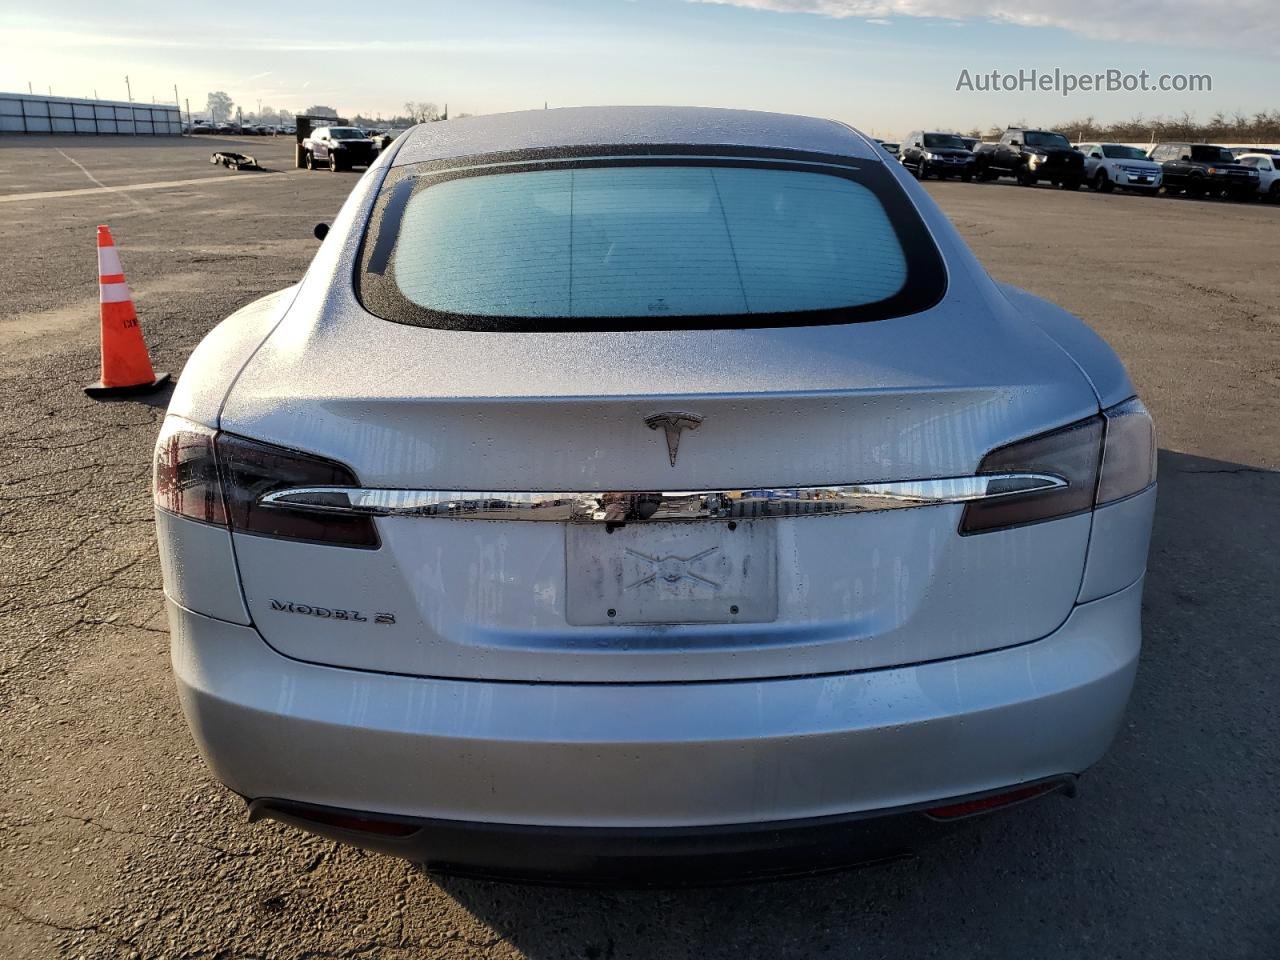 2013 Tesla Model S  Silver vin: 5YJSA1AC4DFP11177